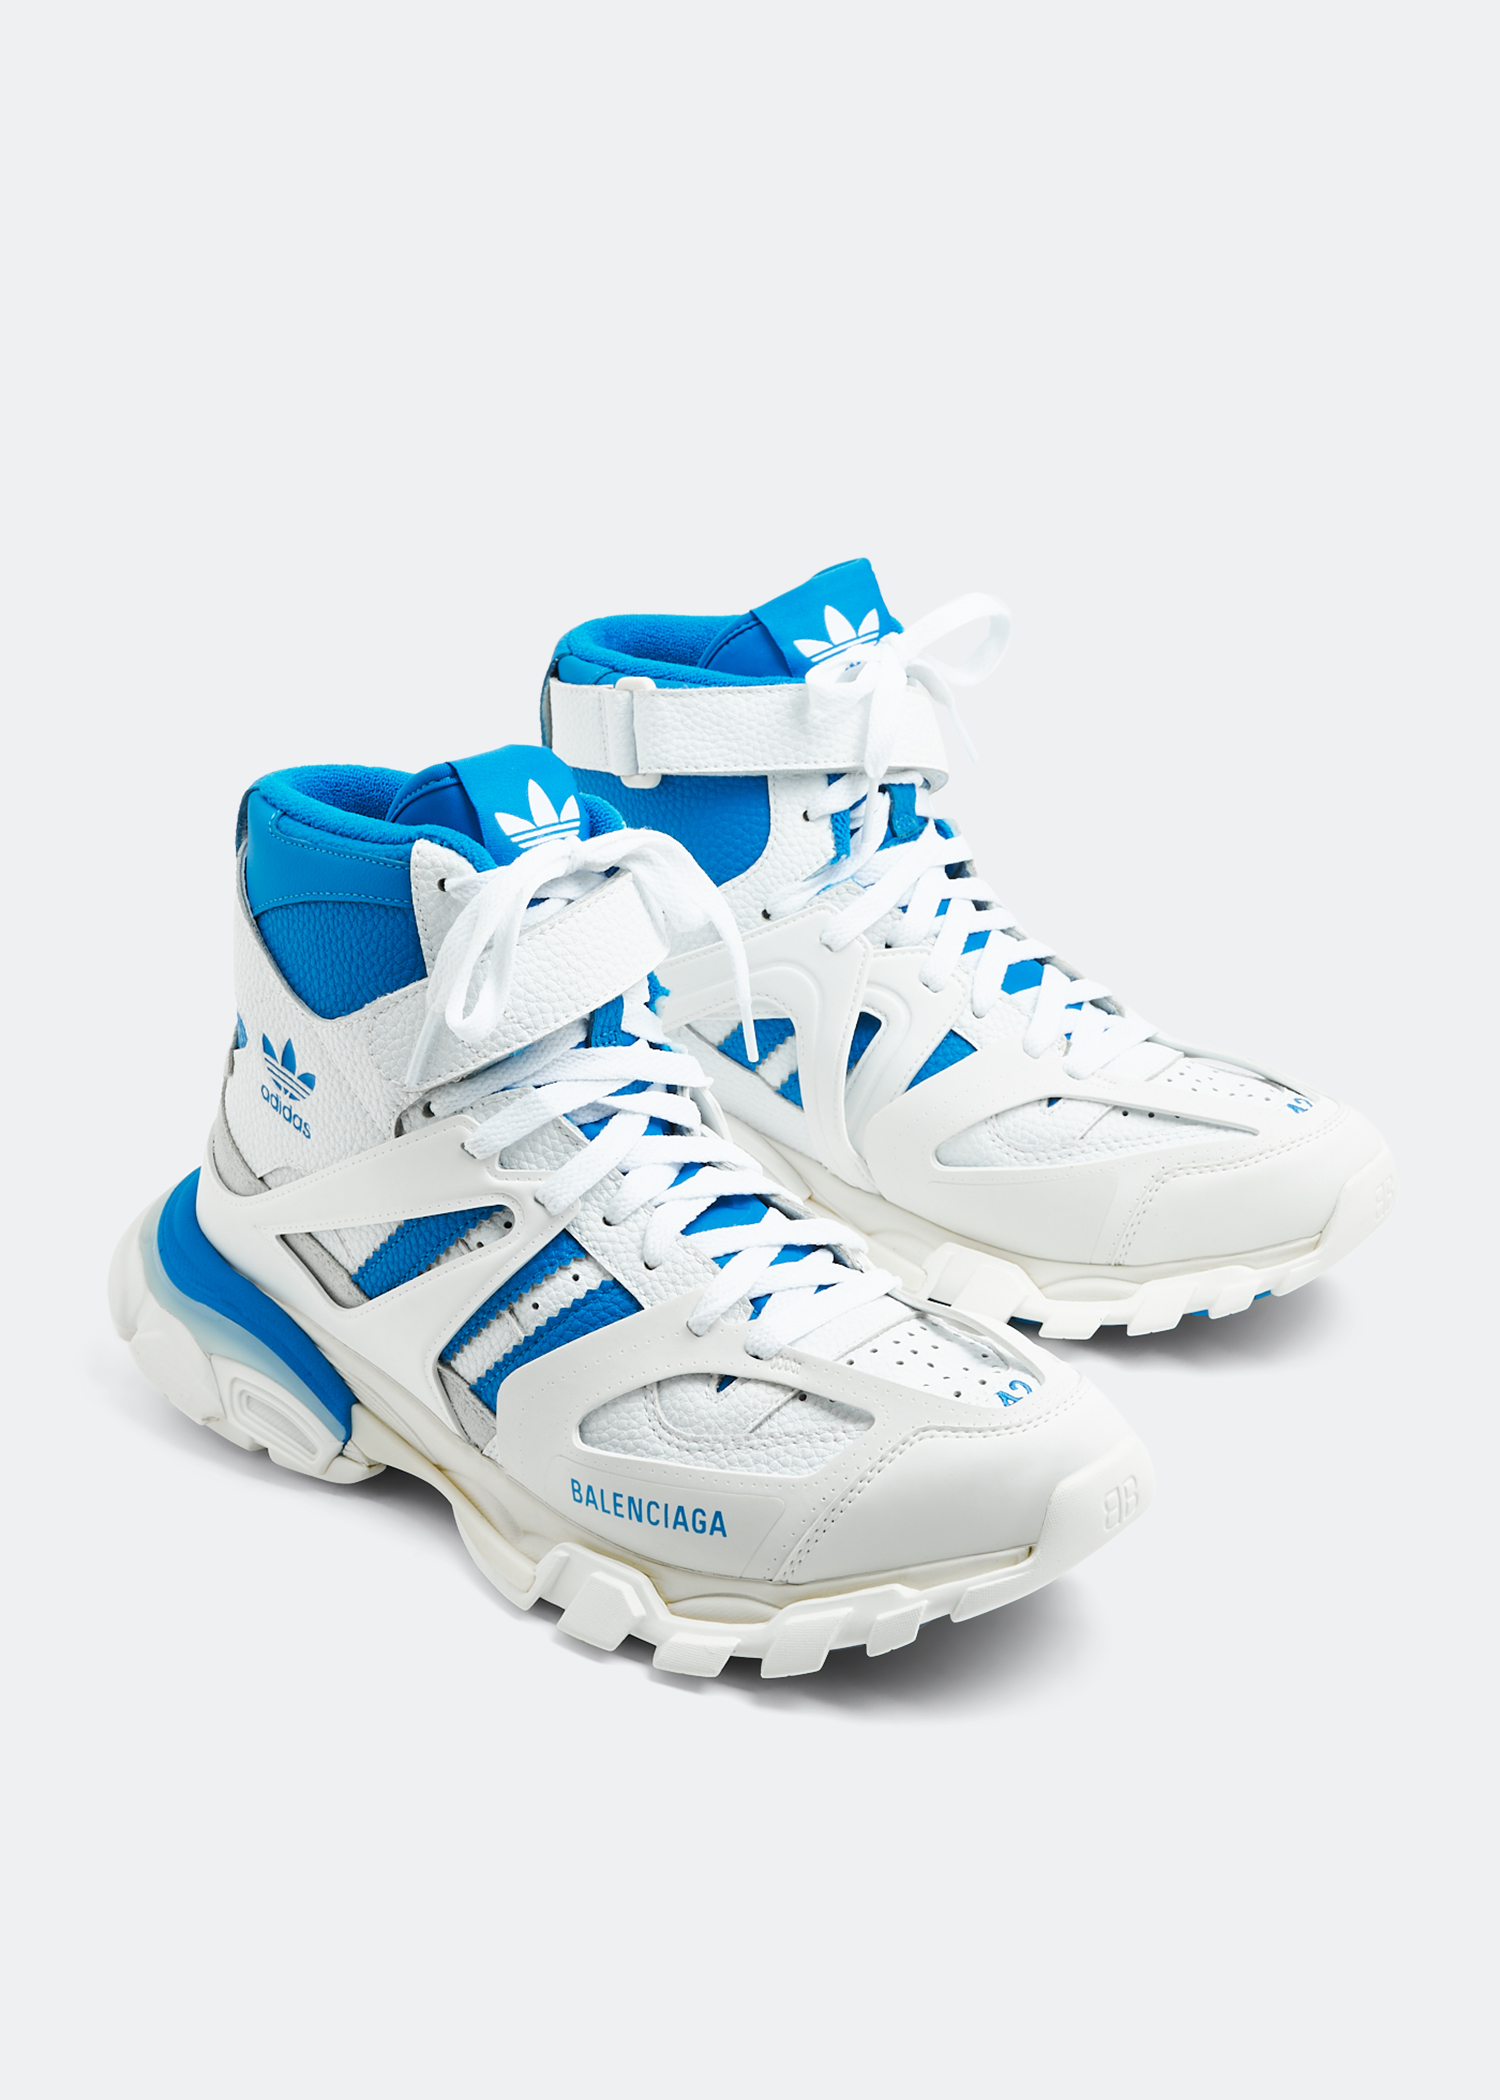 Balenciaga x adidas Track Forum sneakers for Men - White in KSA ...